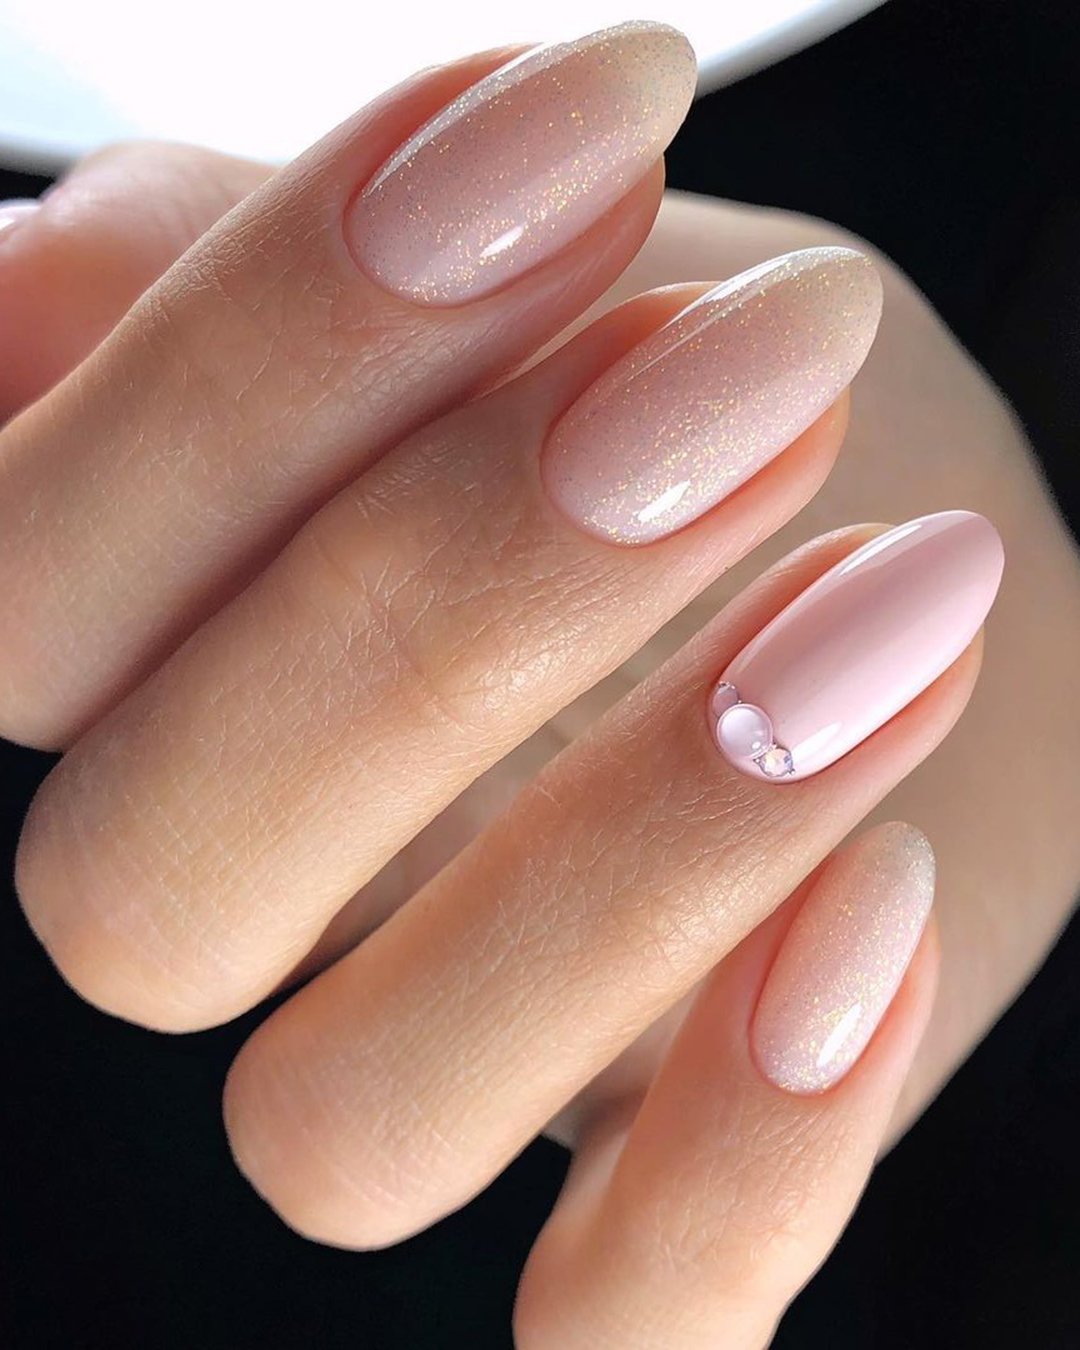 nail design bridal ideas for wedding gentle pink elegant mariapro.nails